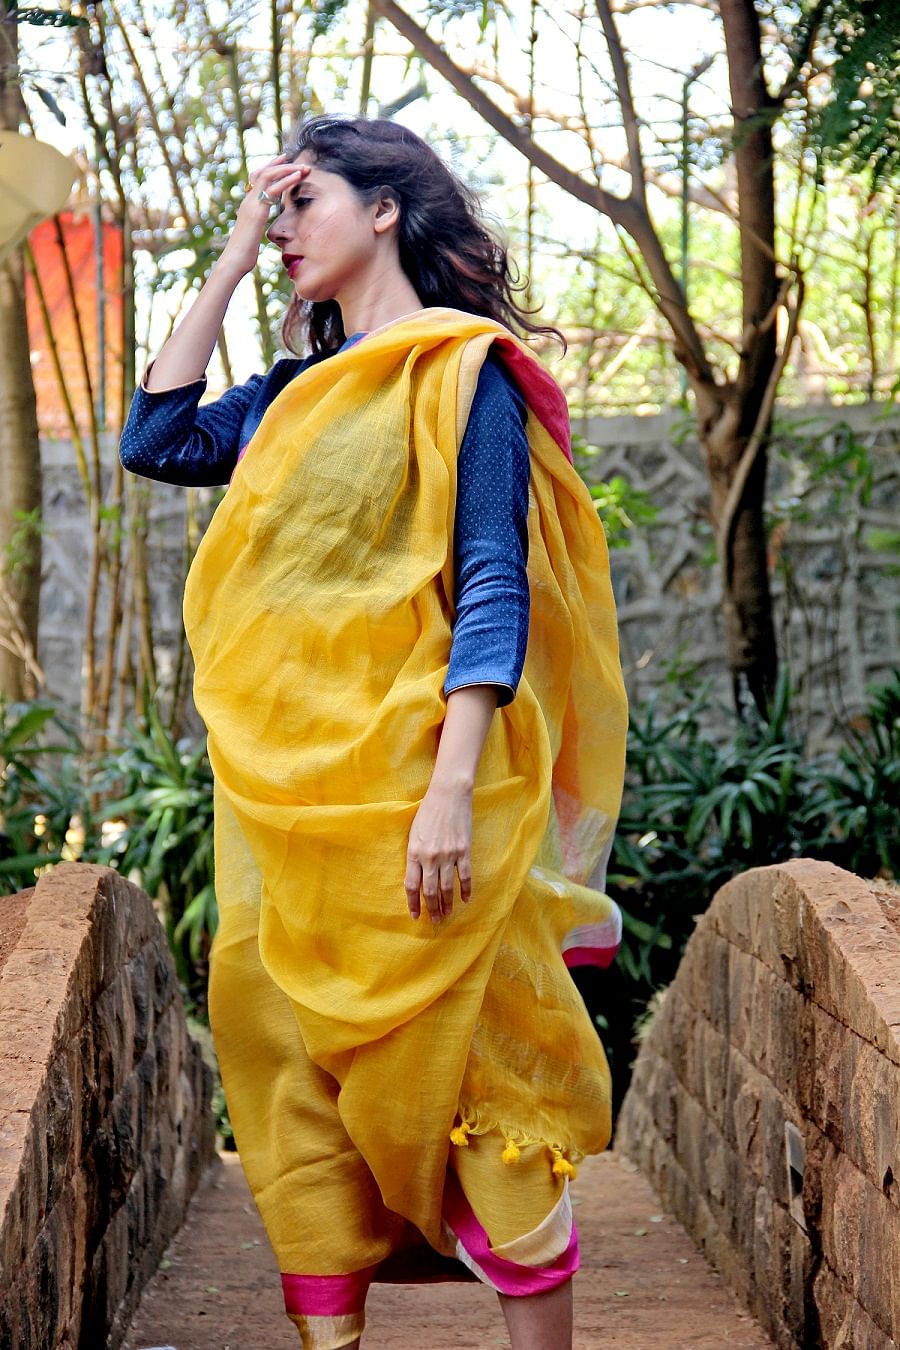 The sari is born 